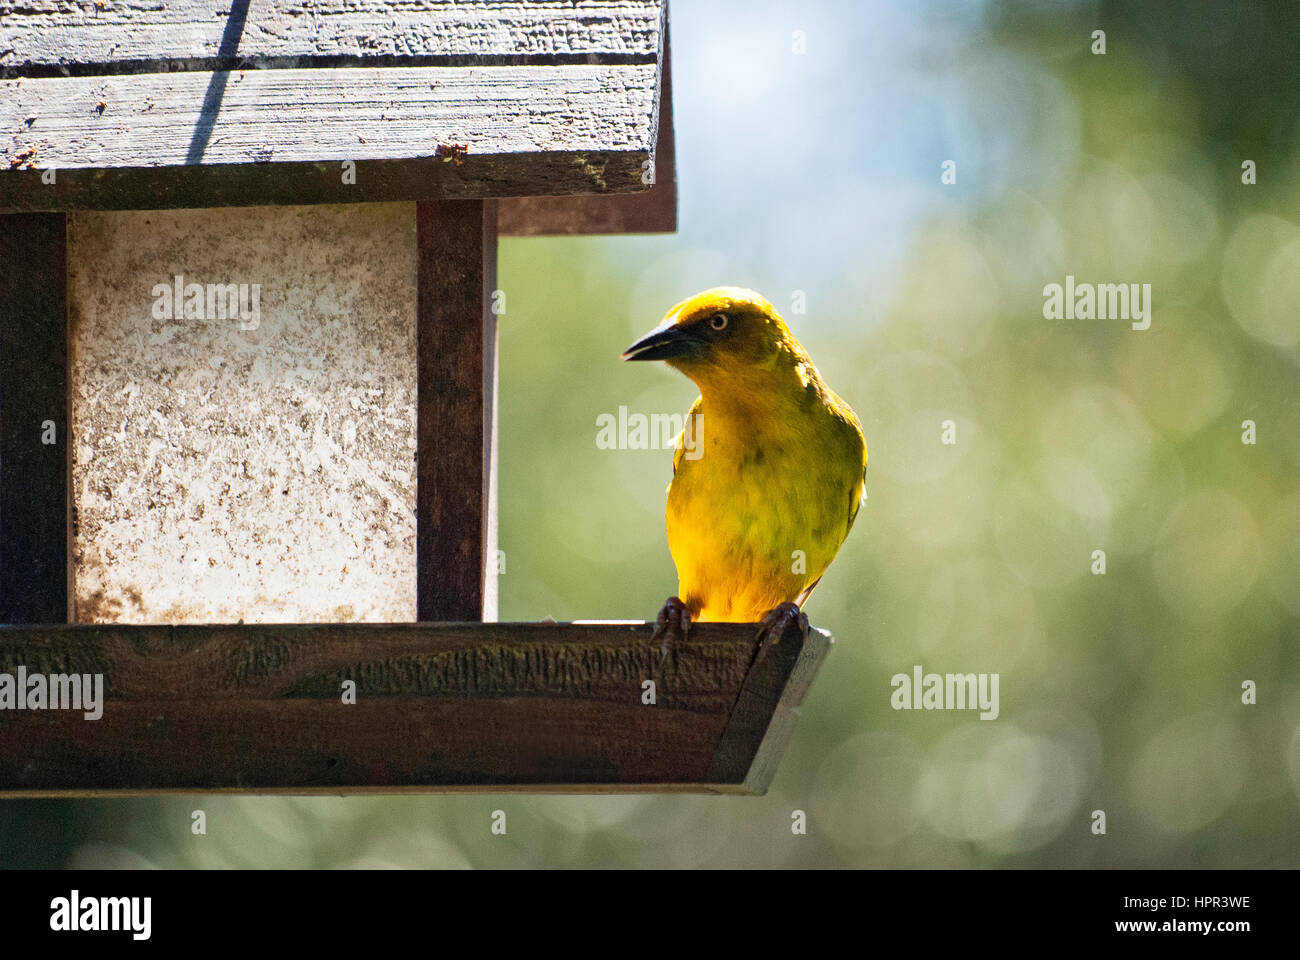 A cape weaver bird sitting on a bird feeder in a garden in South Africa Stock Photo